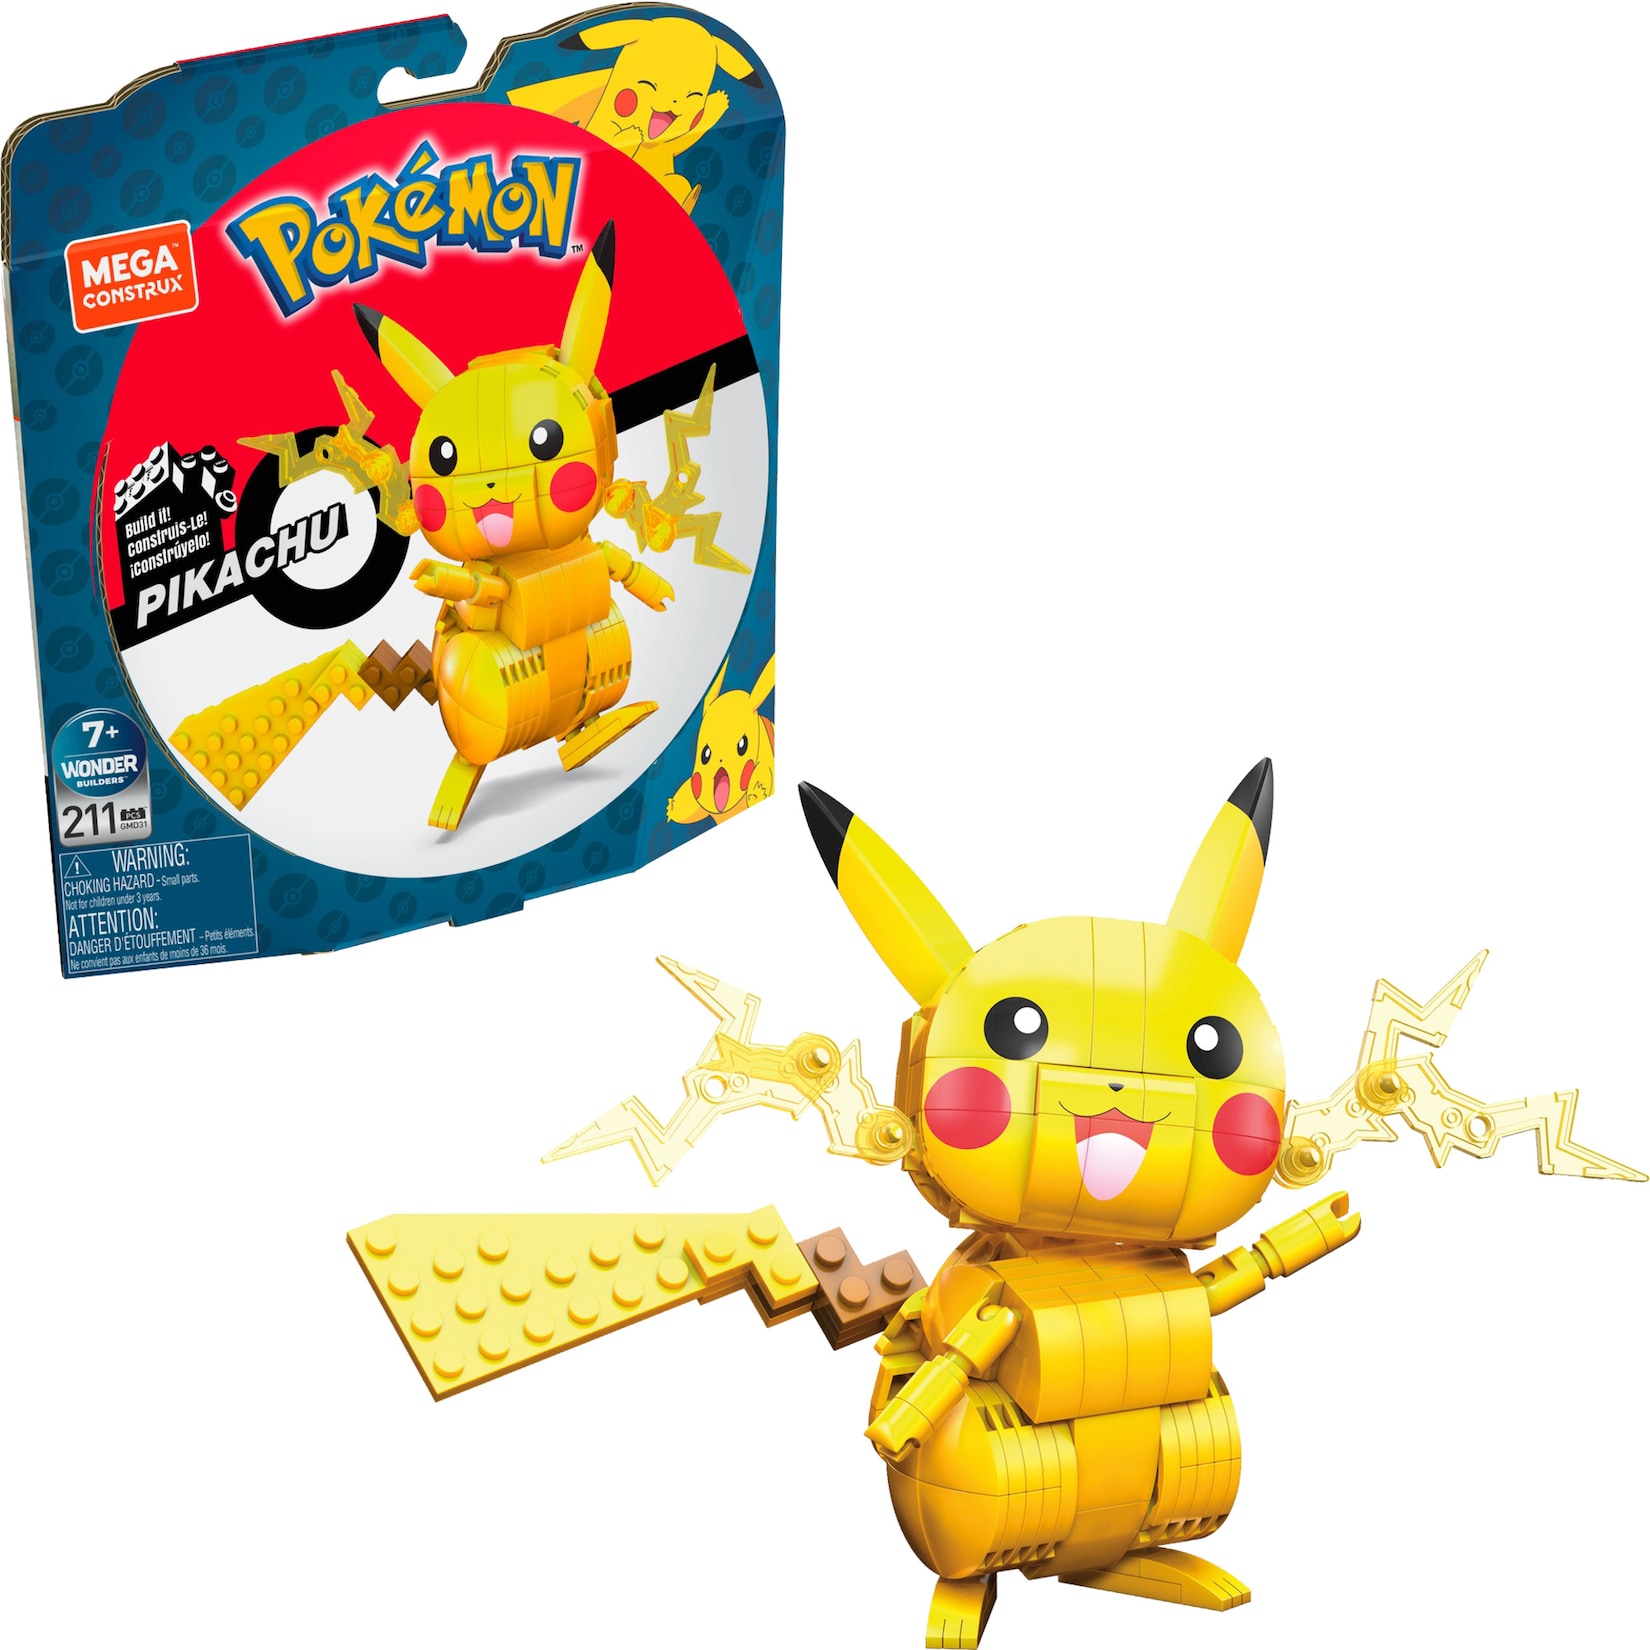 Mattel Konstruktionsspielzeug MEGA Pokémon Pikachu